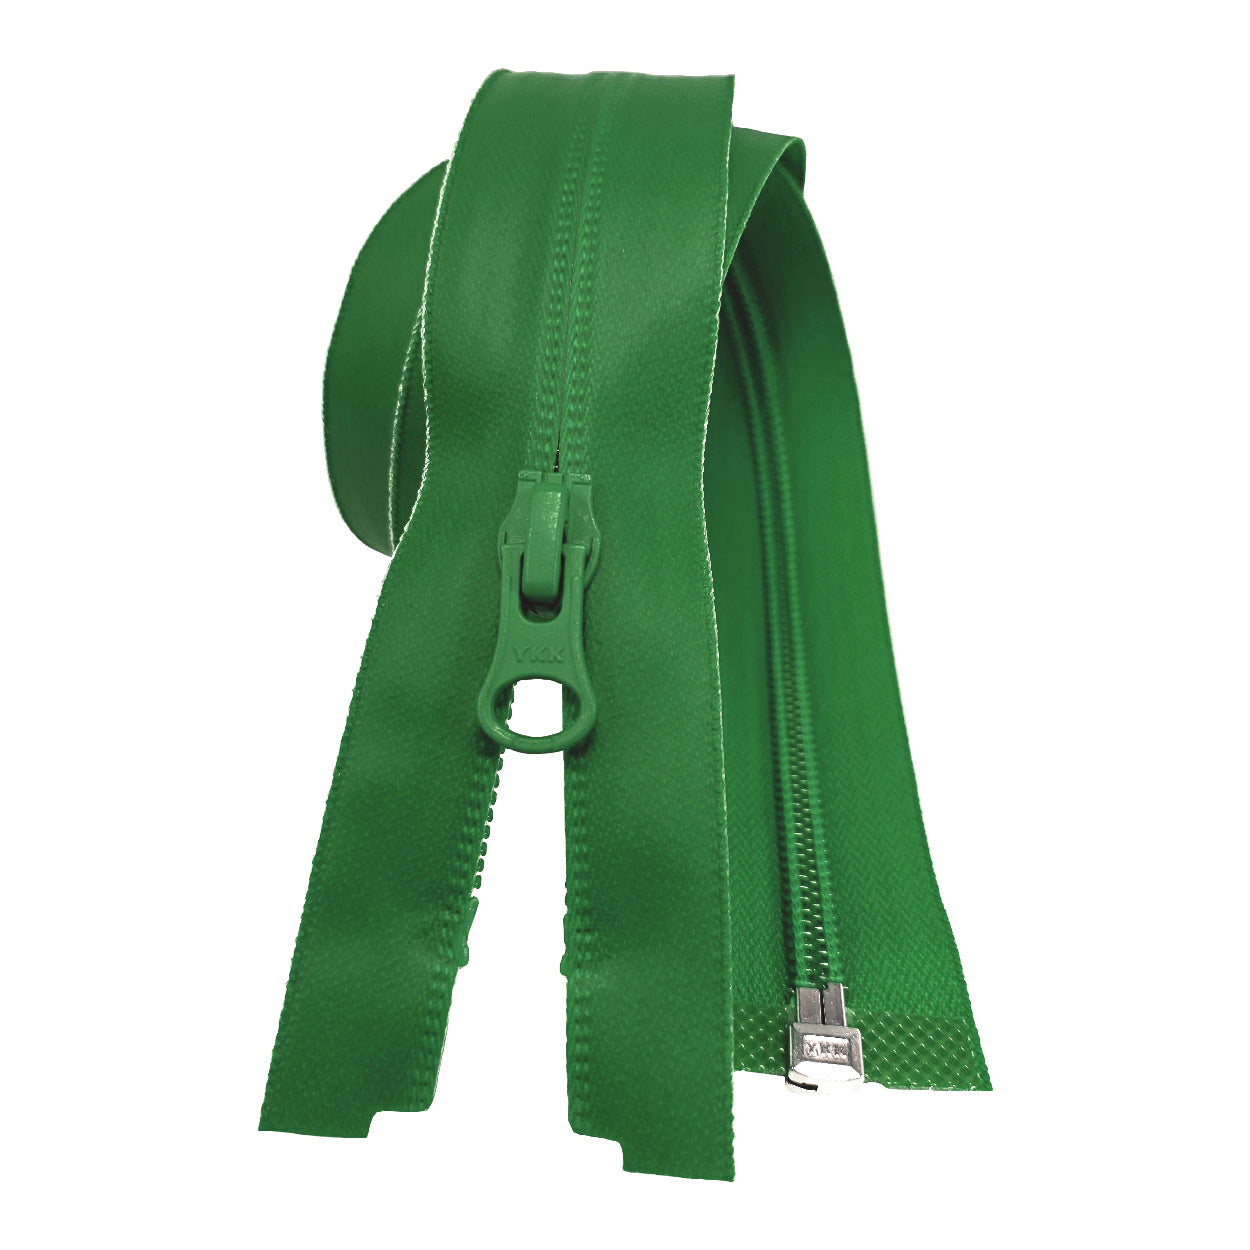 YKK Aquaguard Water repellent zip | Green from Jaycotts Sewing Supplies